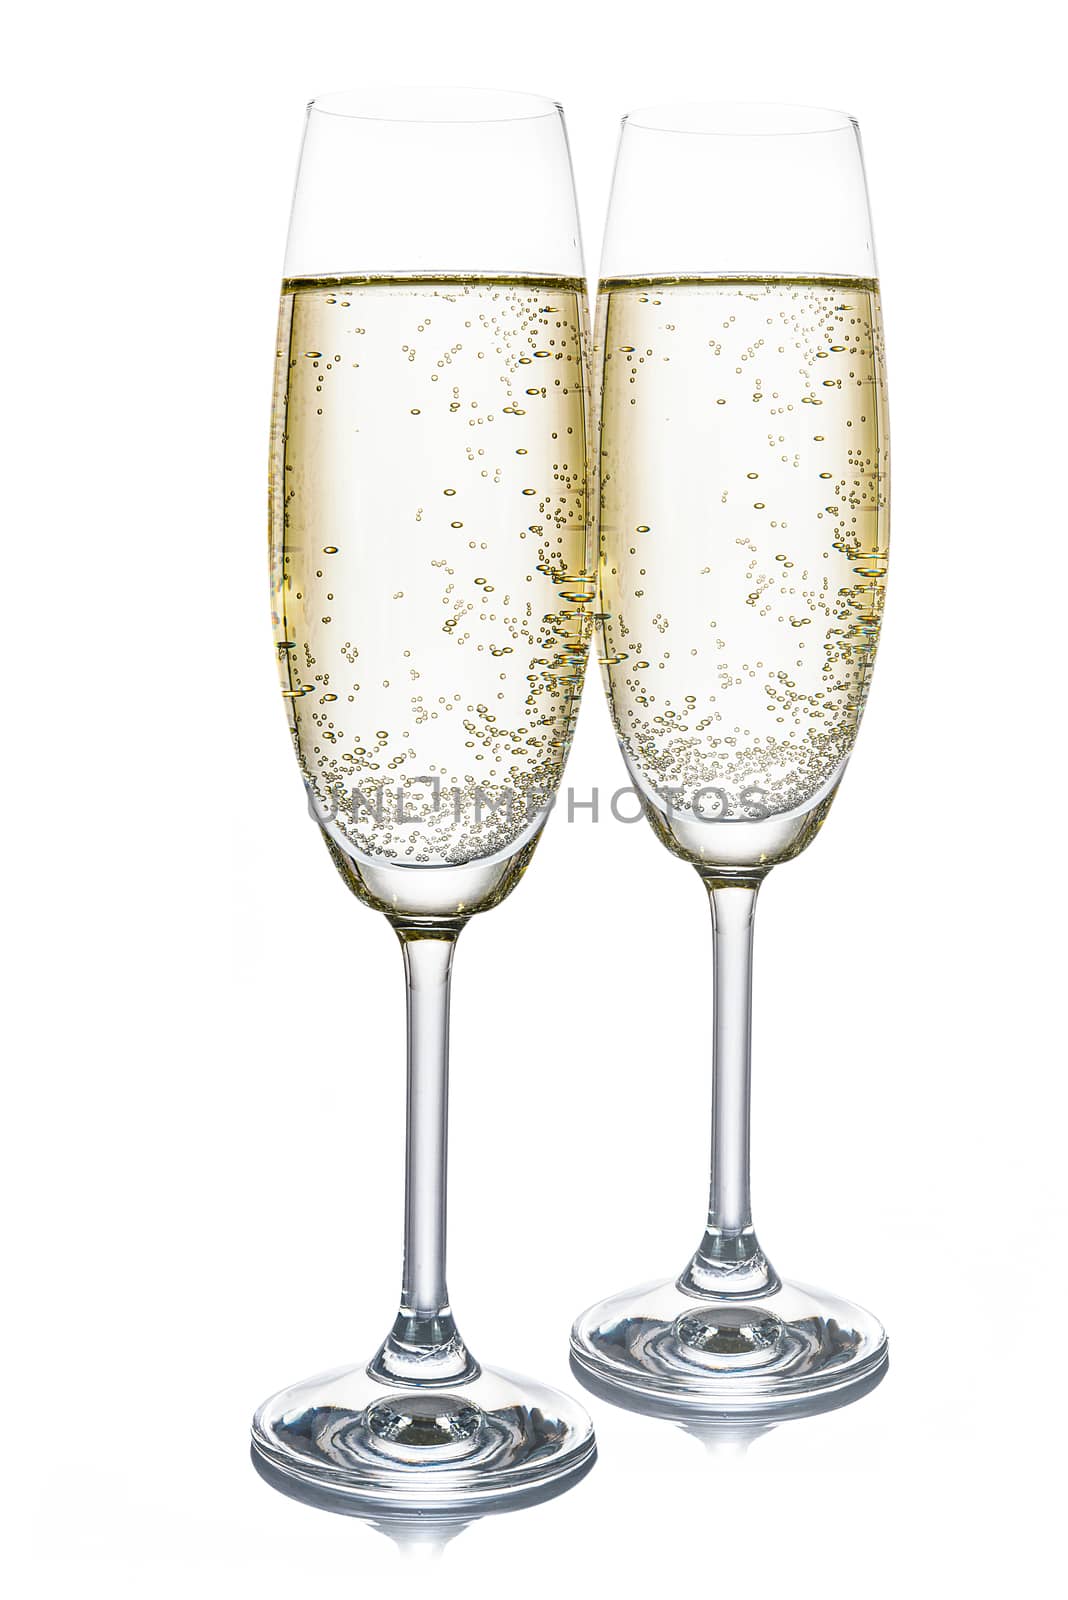 Elegant champagne glasses by wdnet_studio